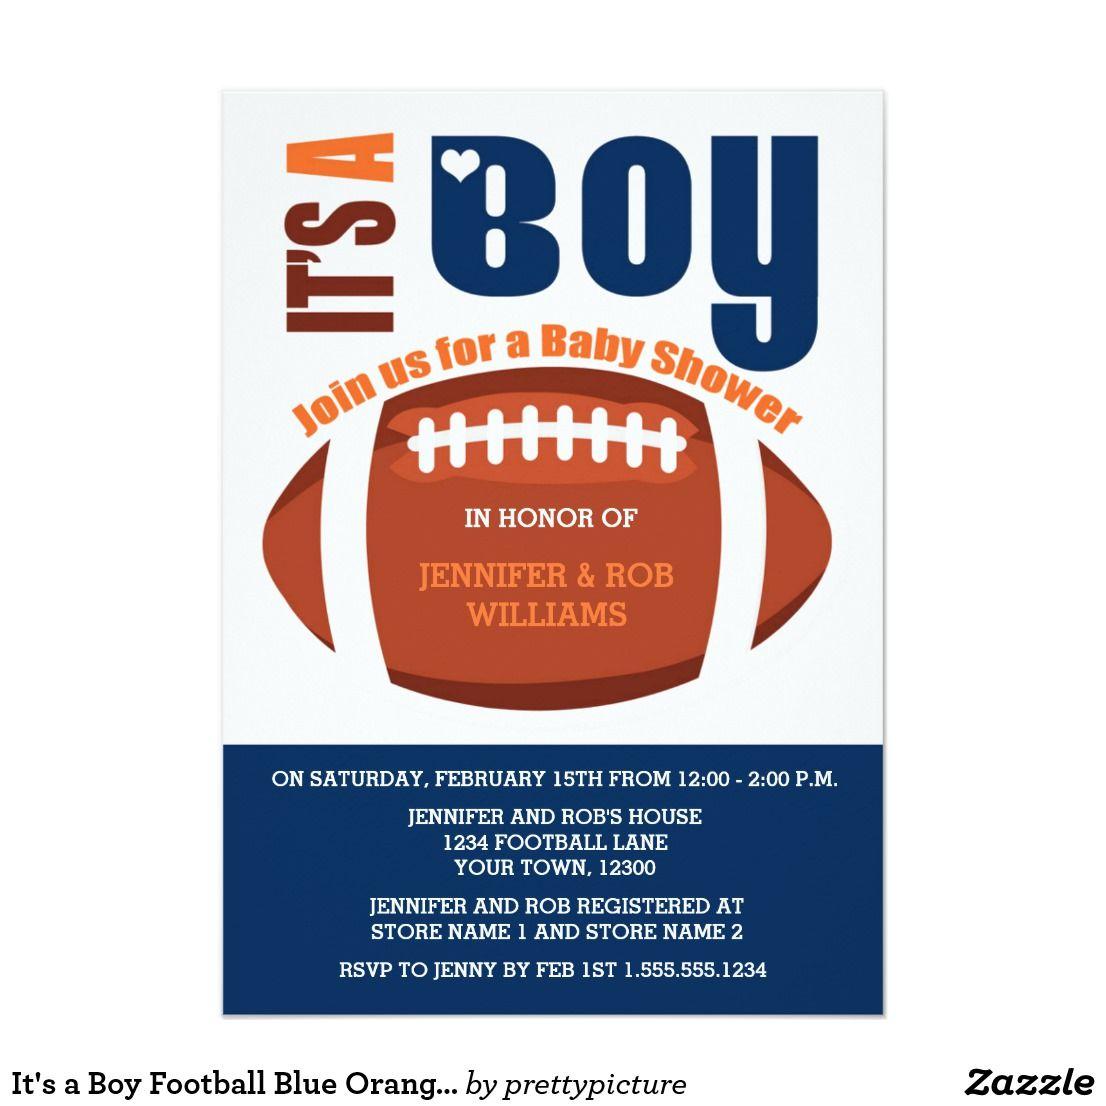 For Red Blue Orange Football Logo - It's a Boy Football Blue Orange Baby Shower Invitation ...